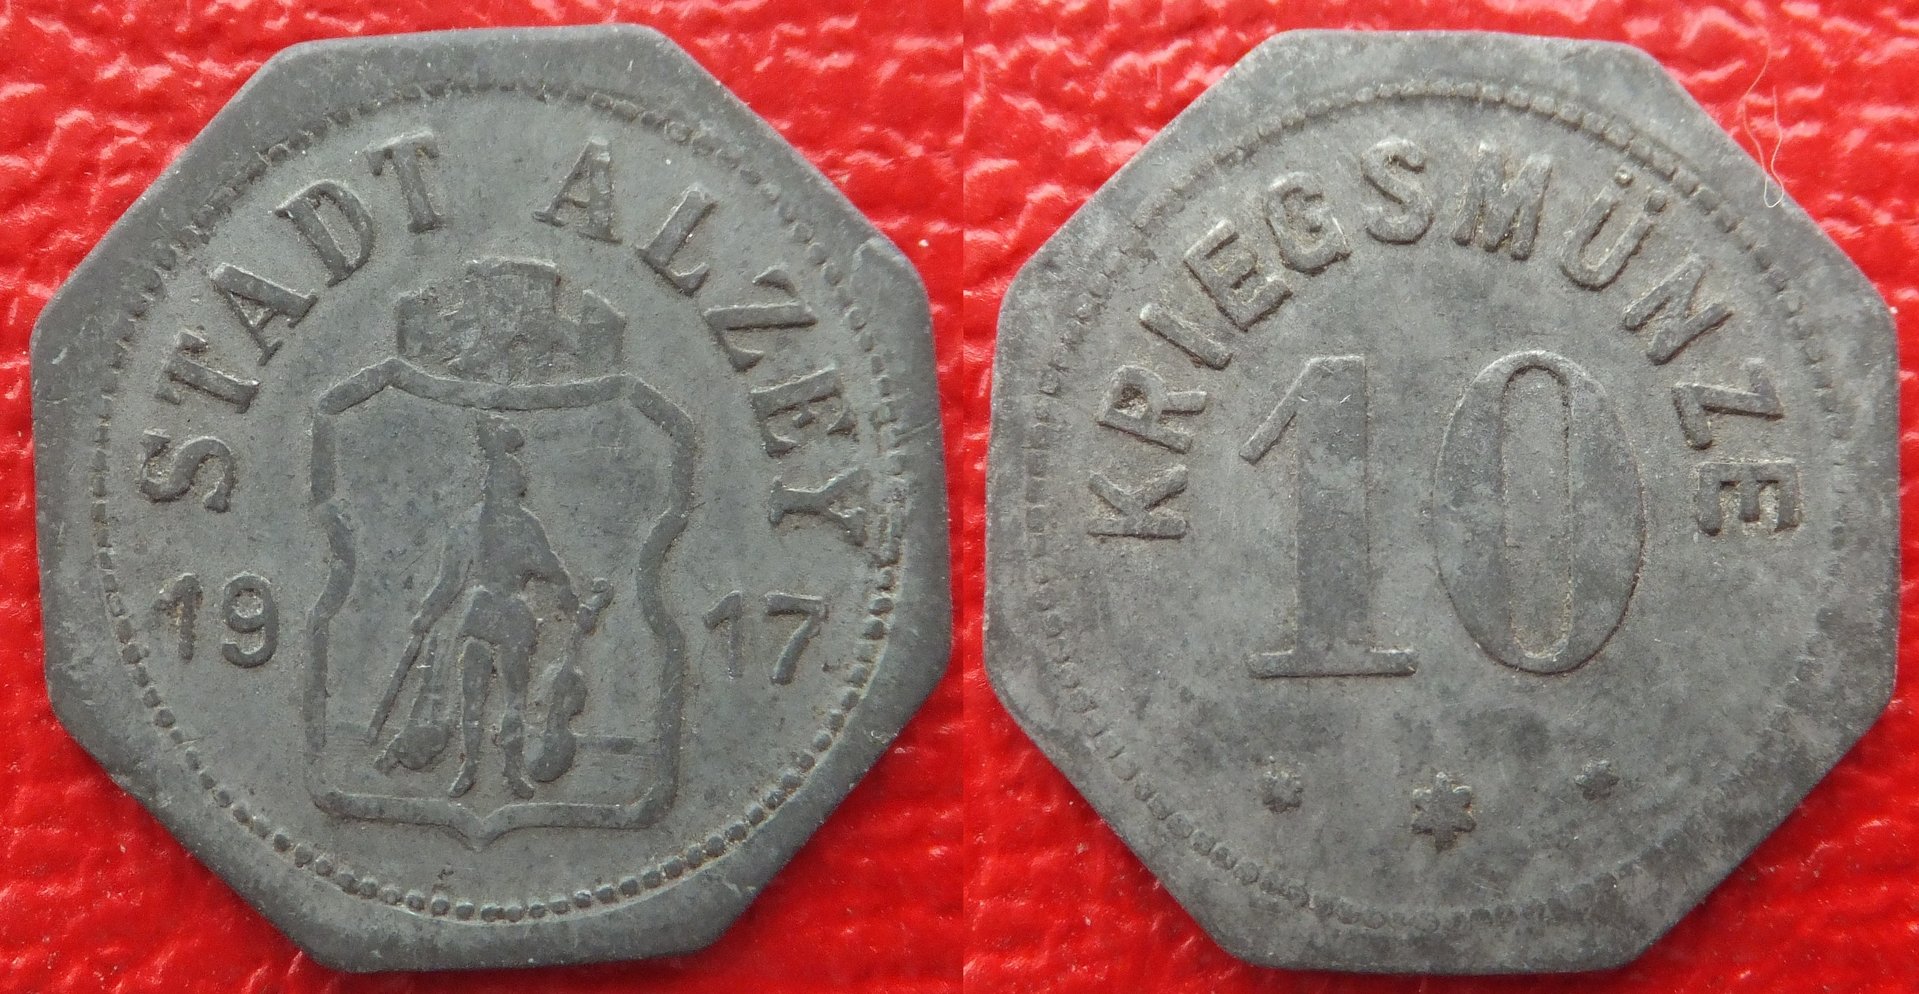 Germany - Alzey 10 pfennigs 1918 (3).JPG